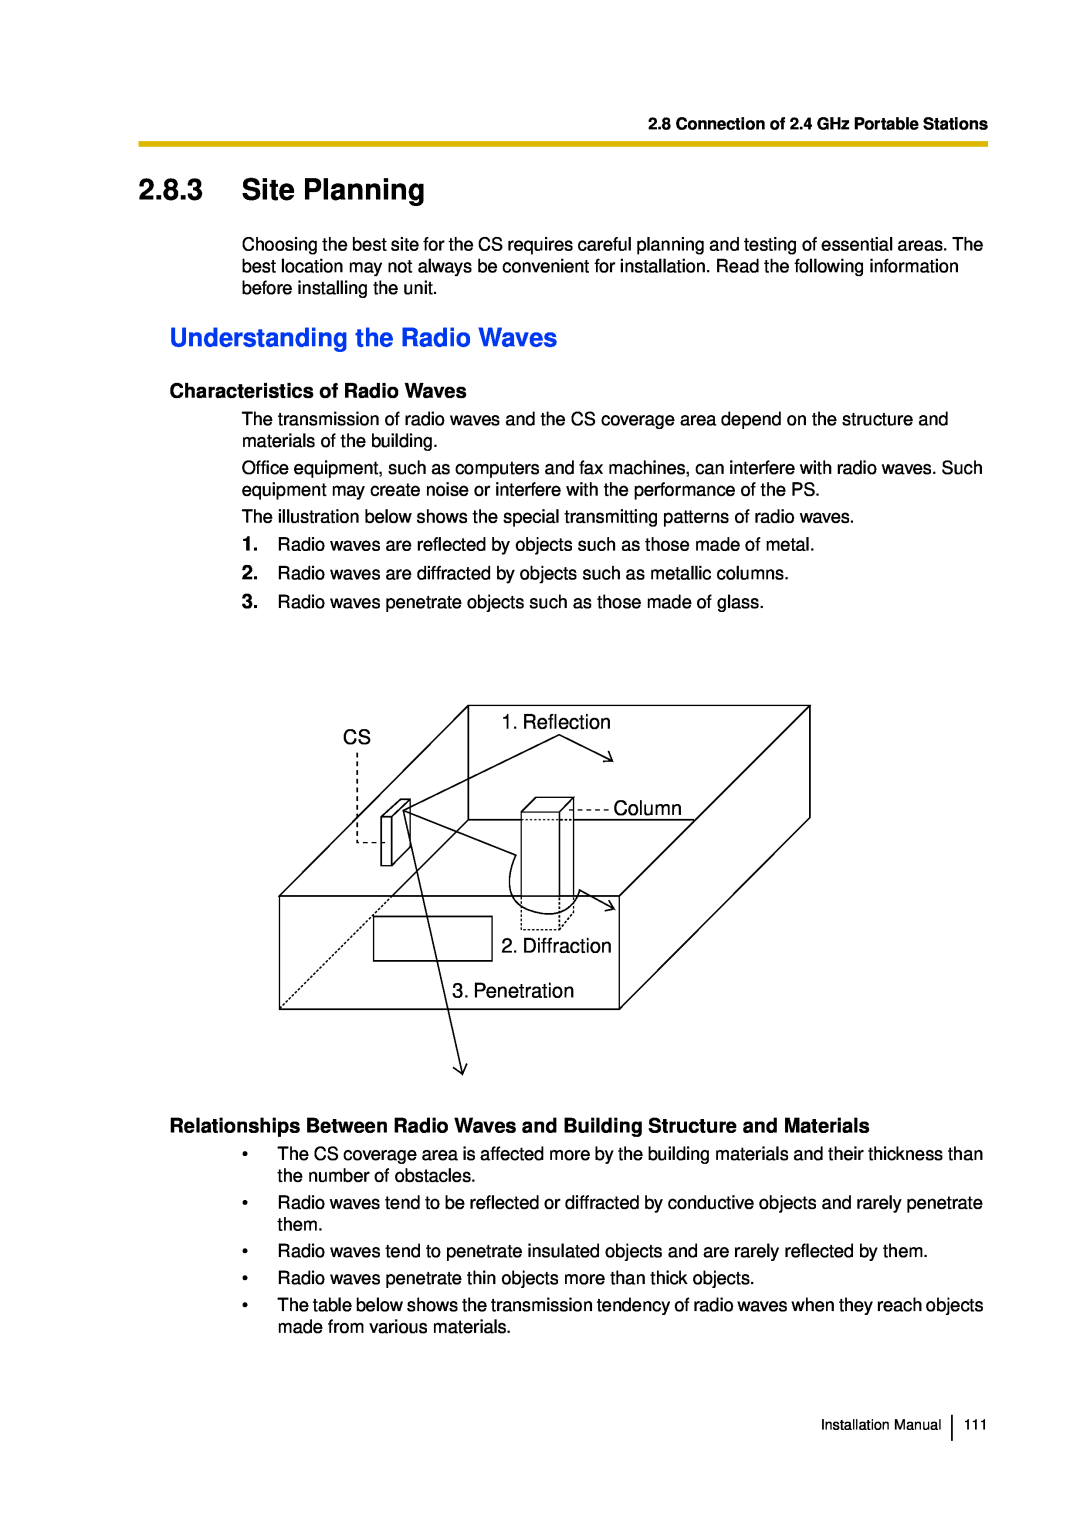 Panasonic KX-TDA30 installation manual 2.8.3Site Planning, Understanding the Radio Waves 